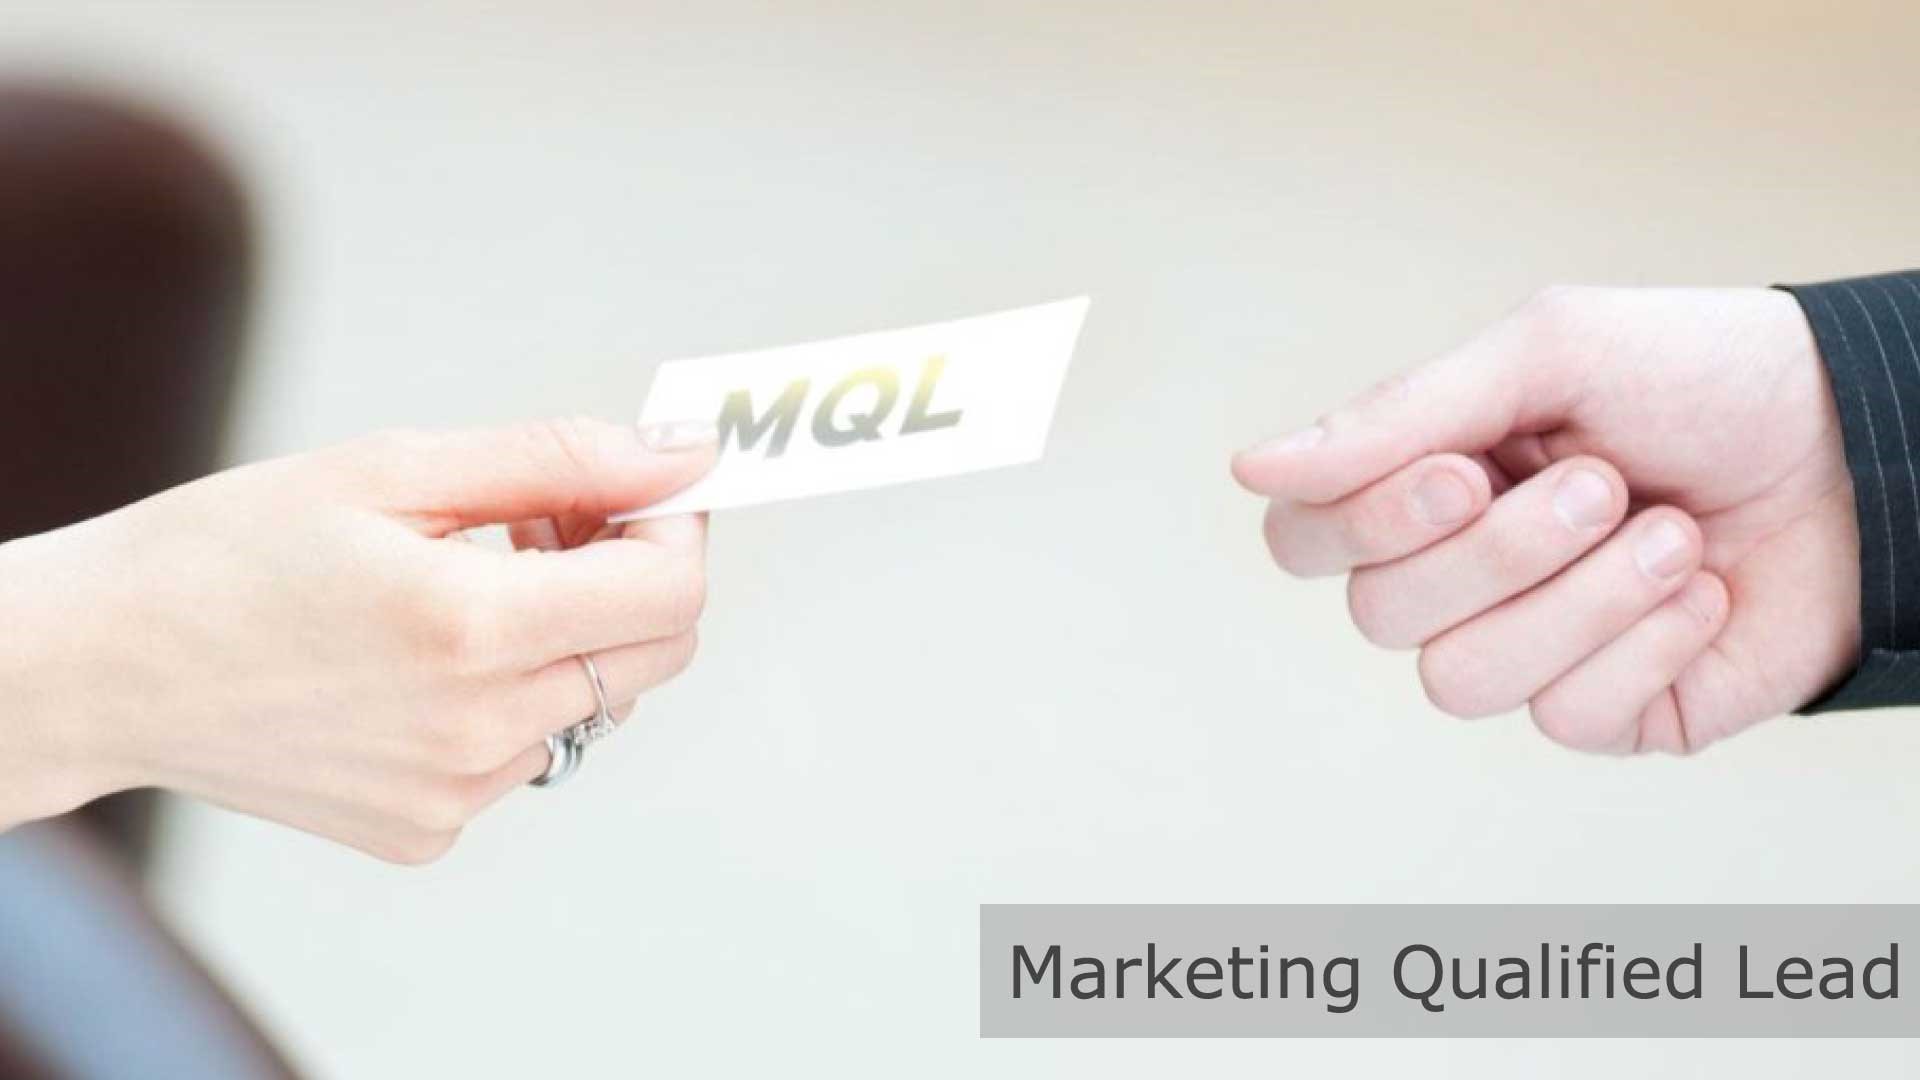 Marketing qualifiying leads